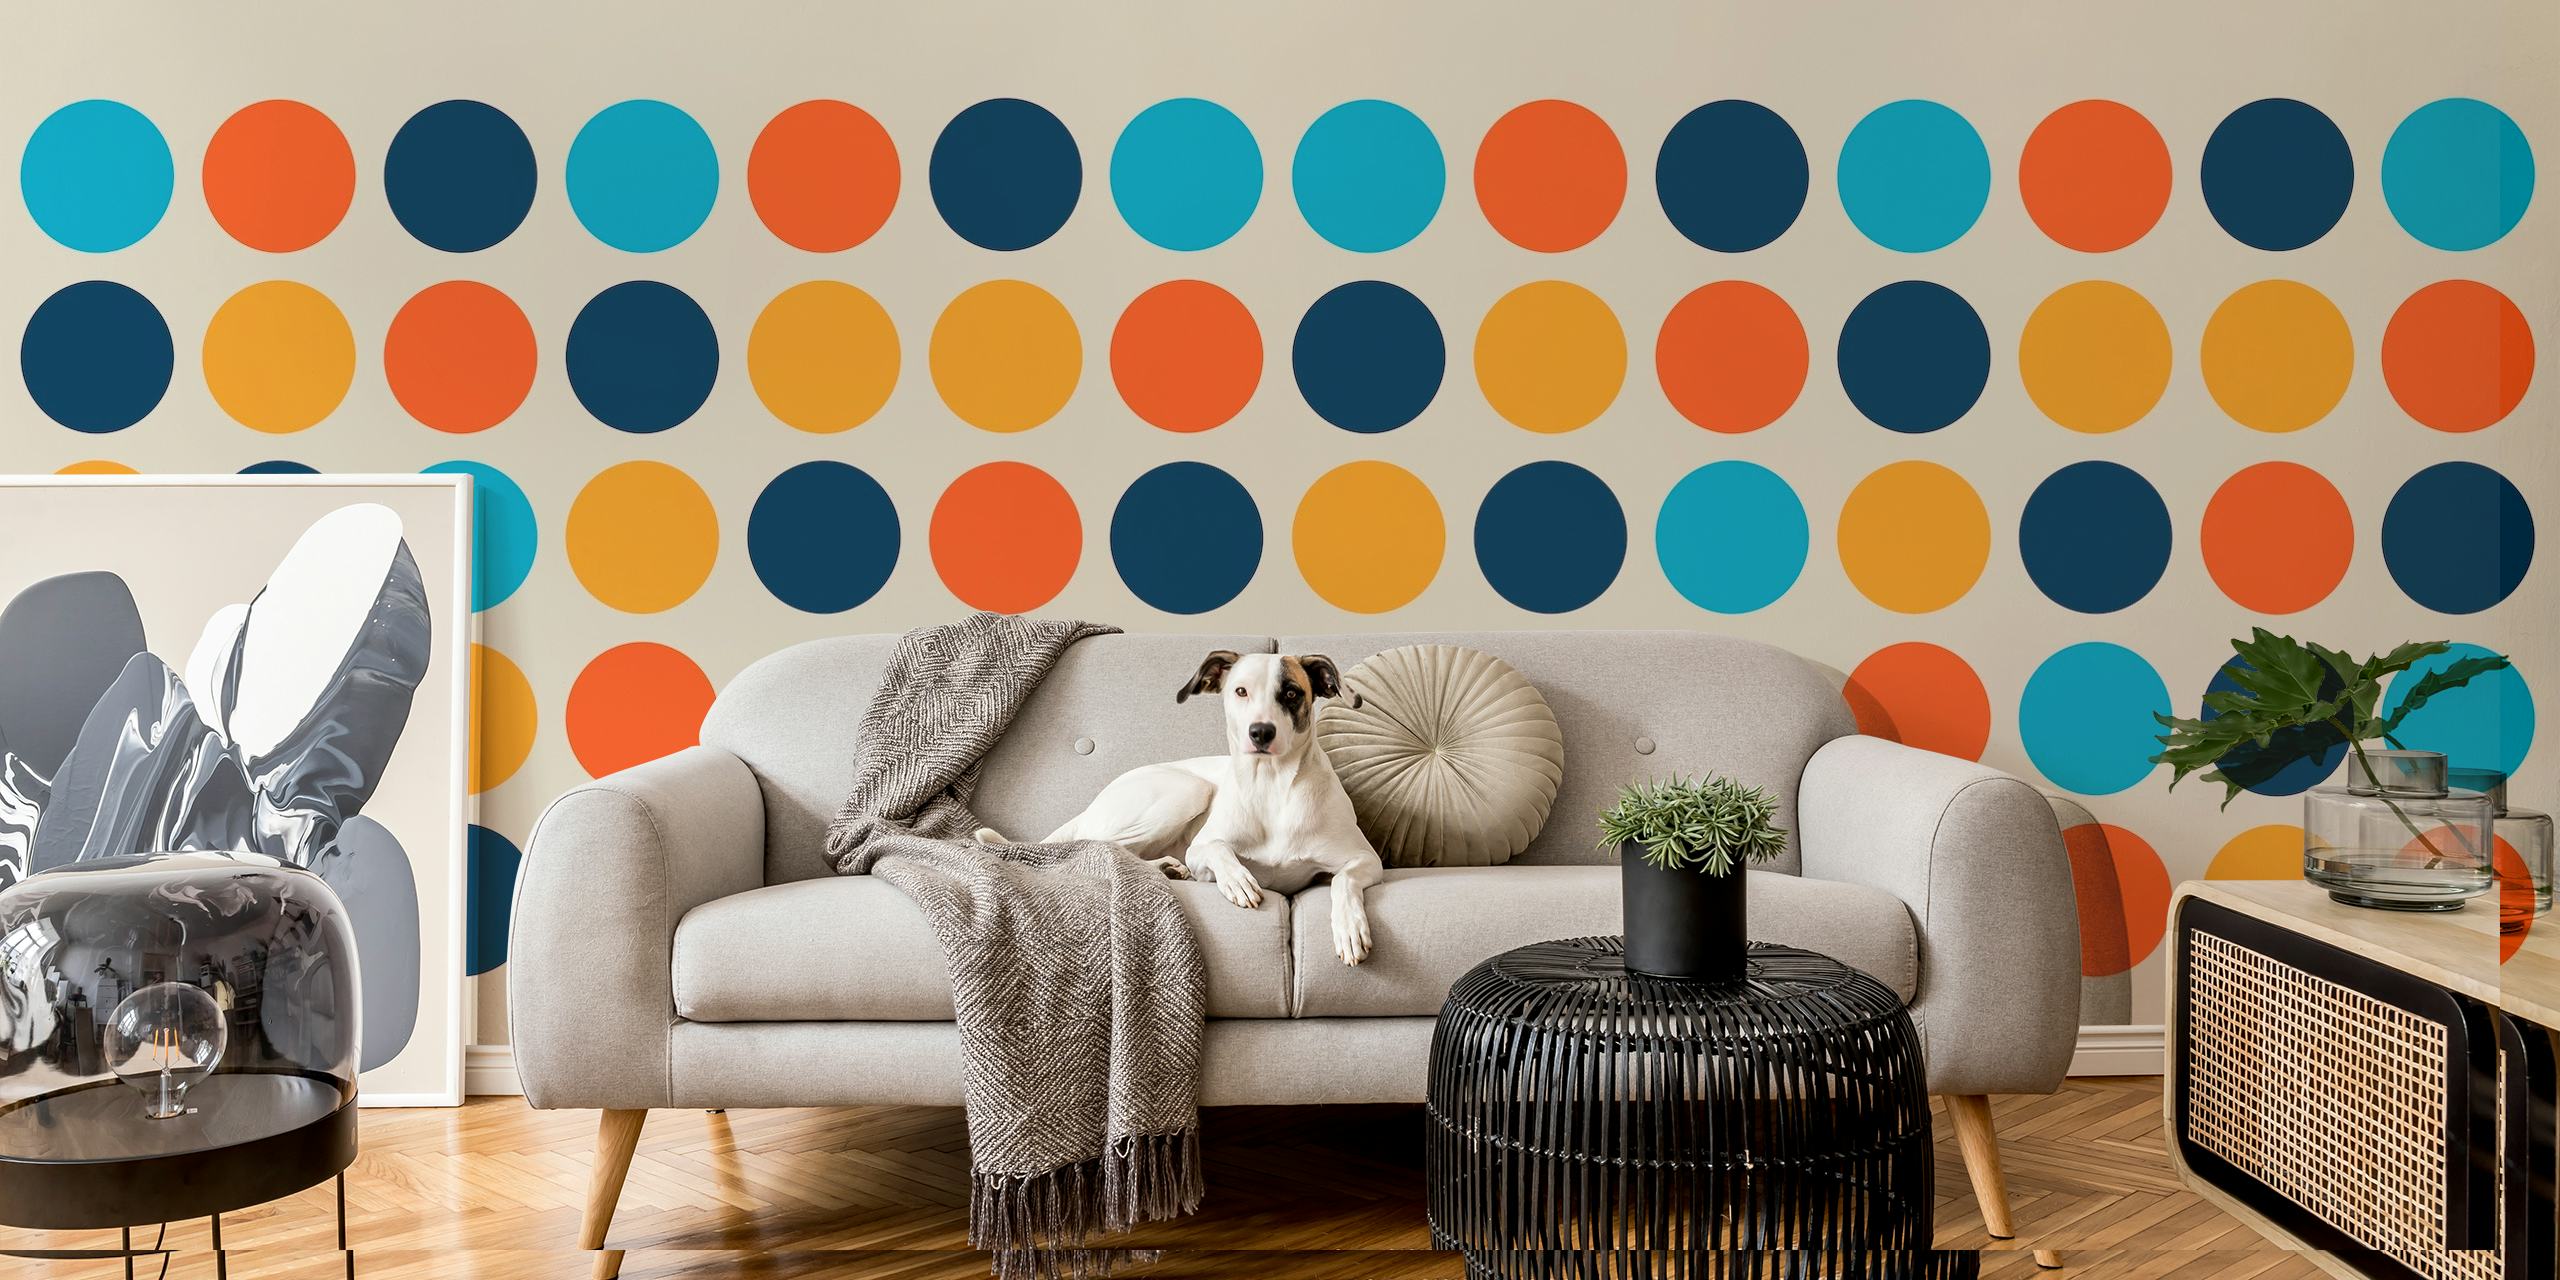 Geometric circle pattern wall mural in blue and orange